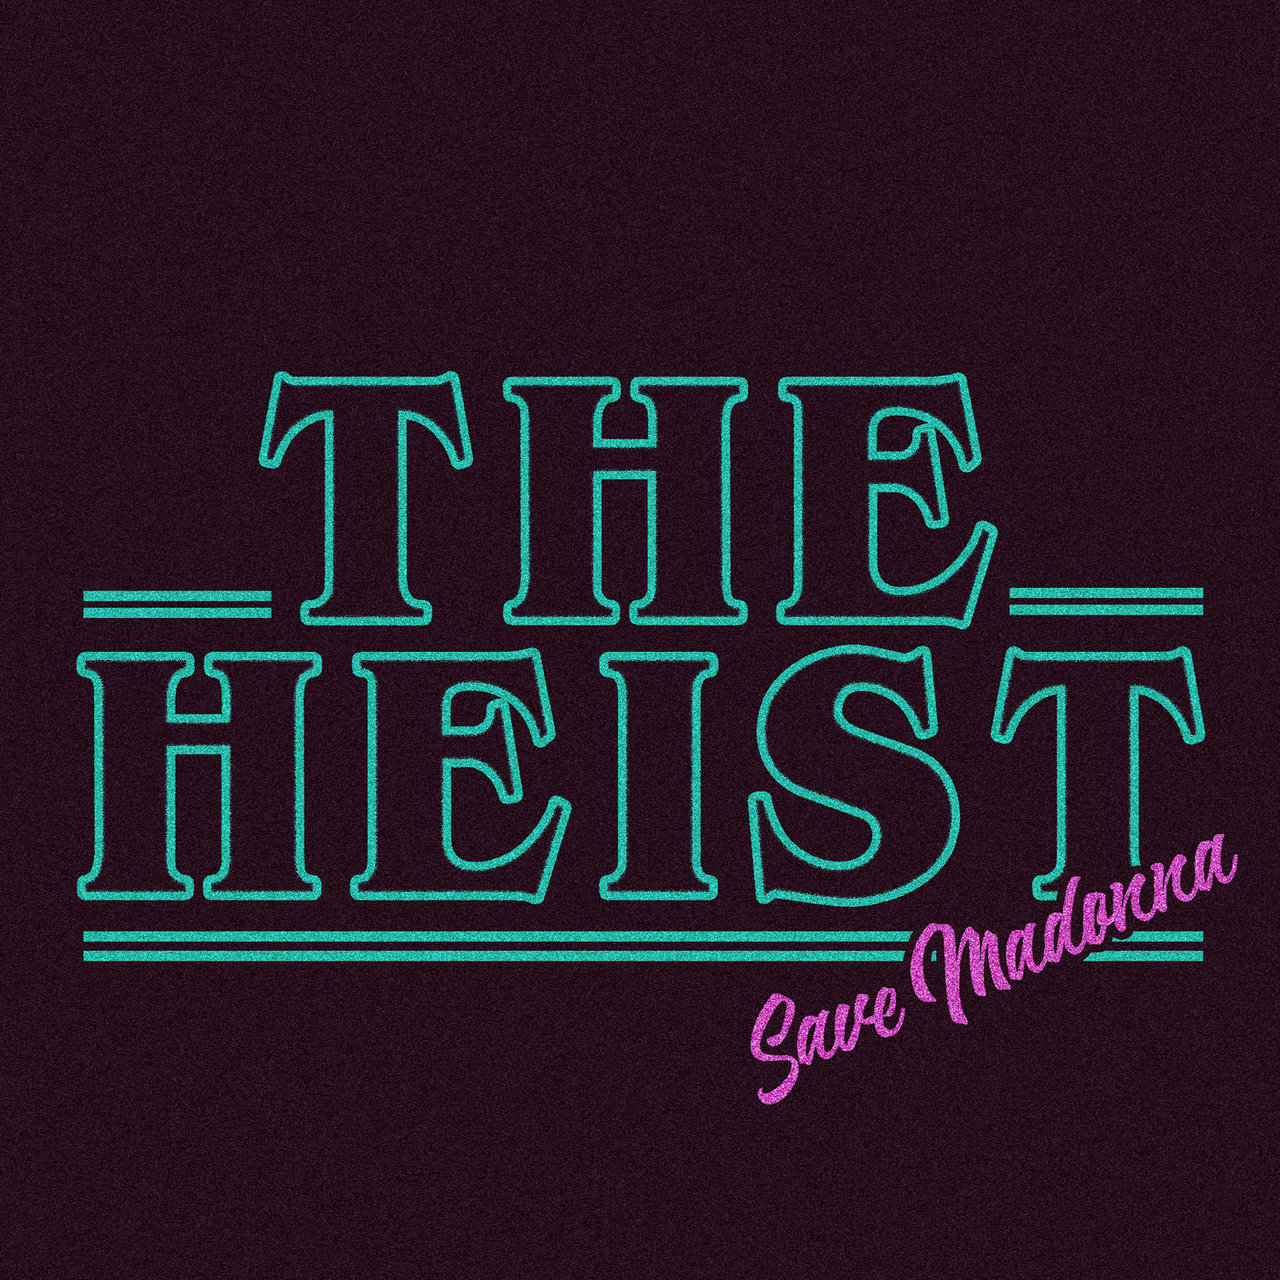 The Heist — Save Madonna cover artwork